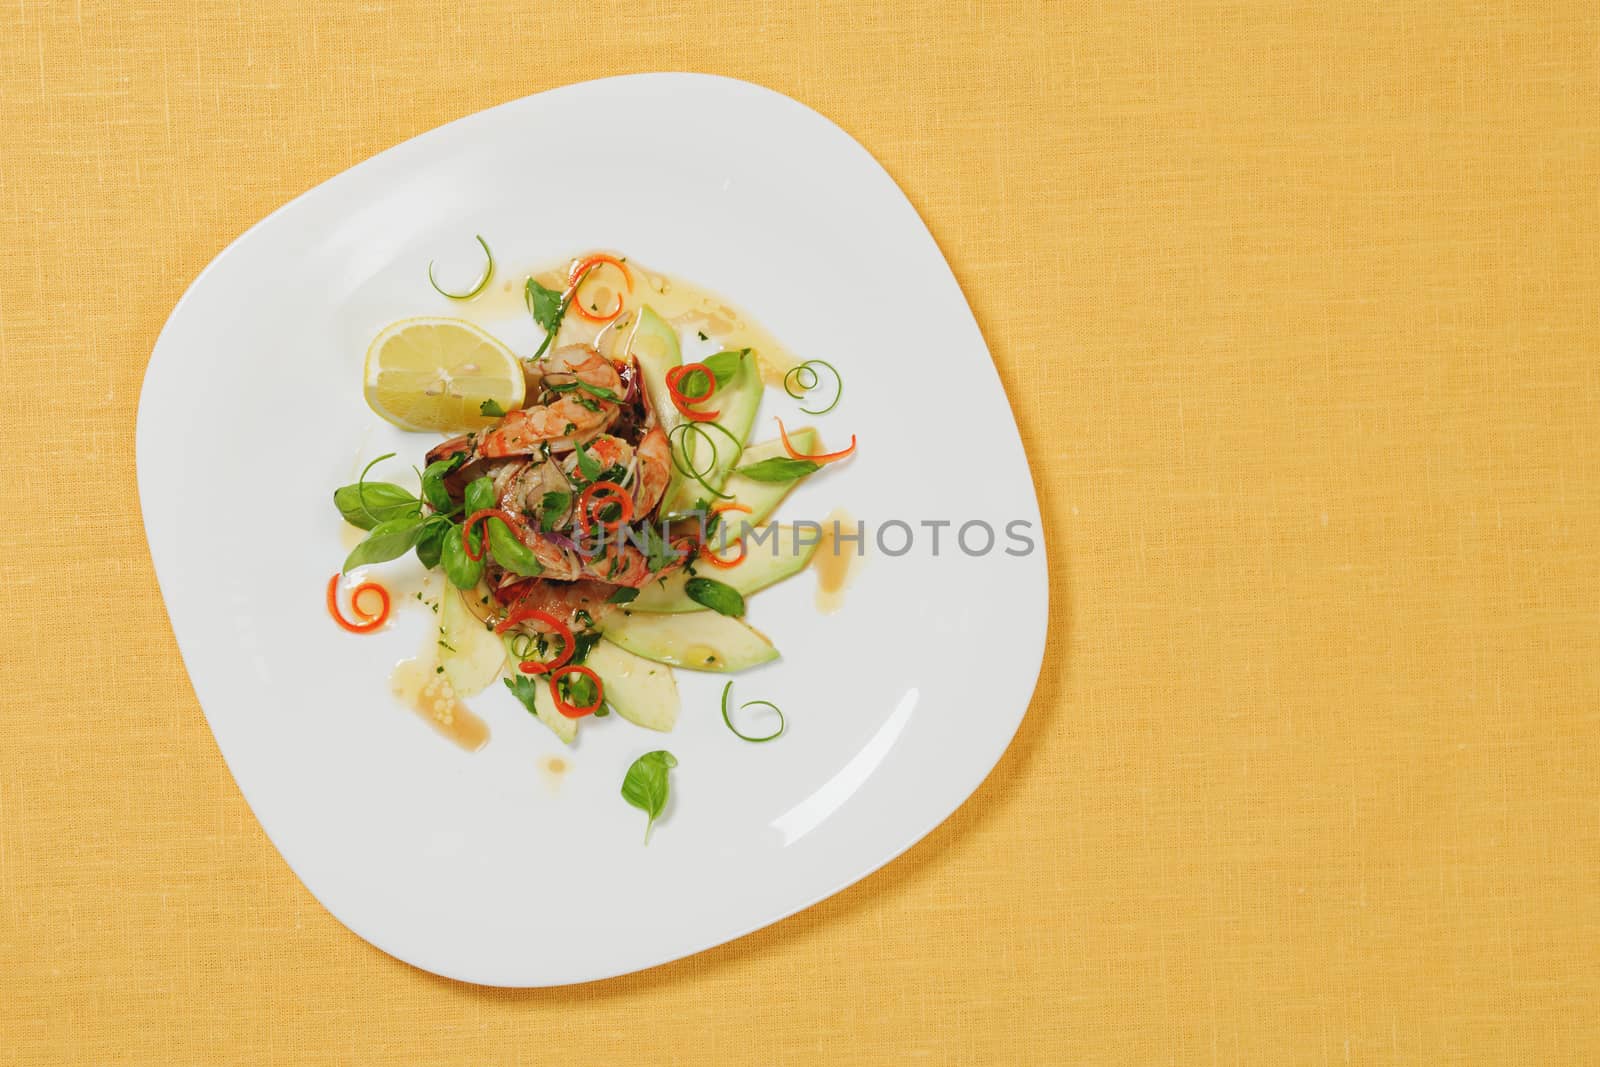 Seafood salade on white plate with shripms and avocado